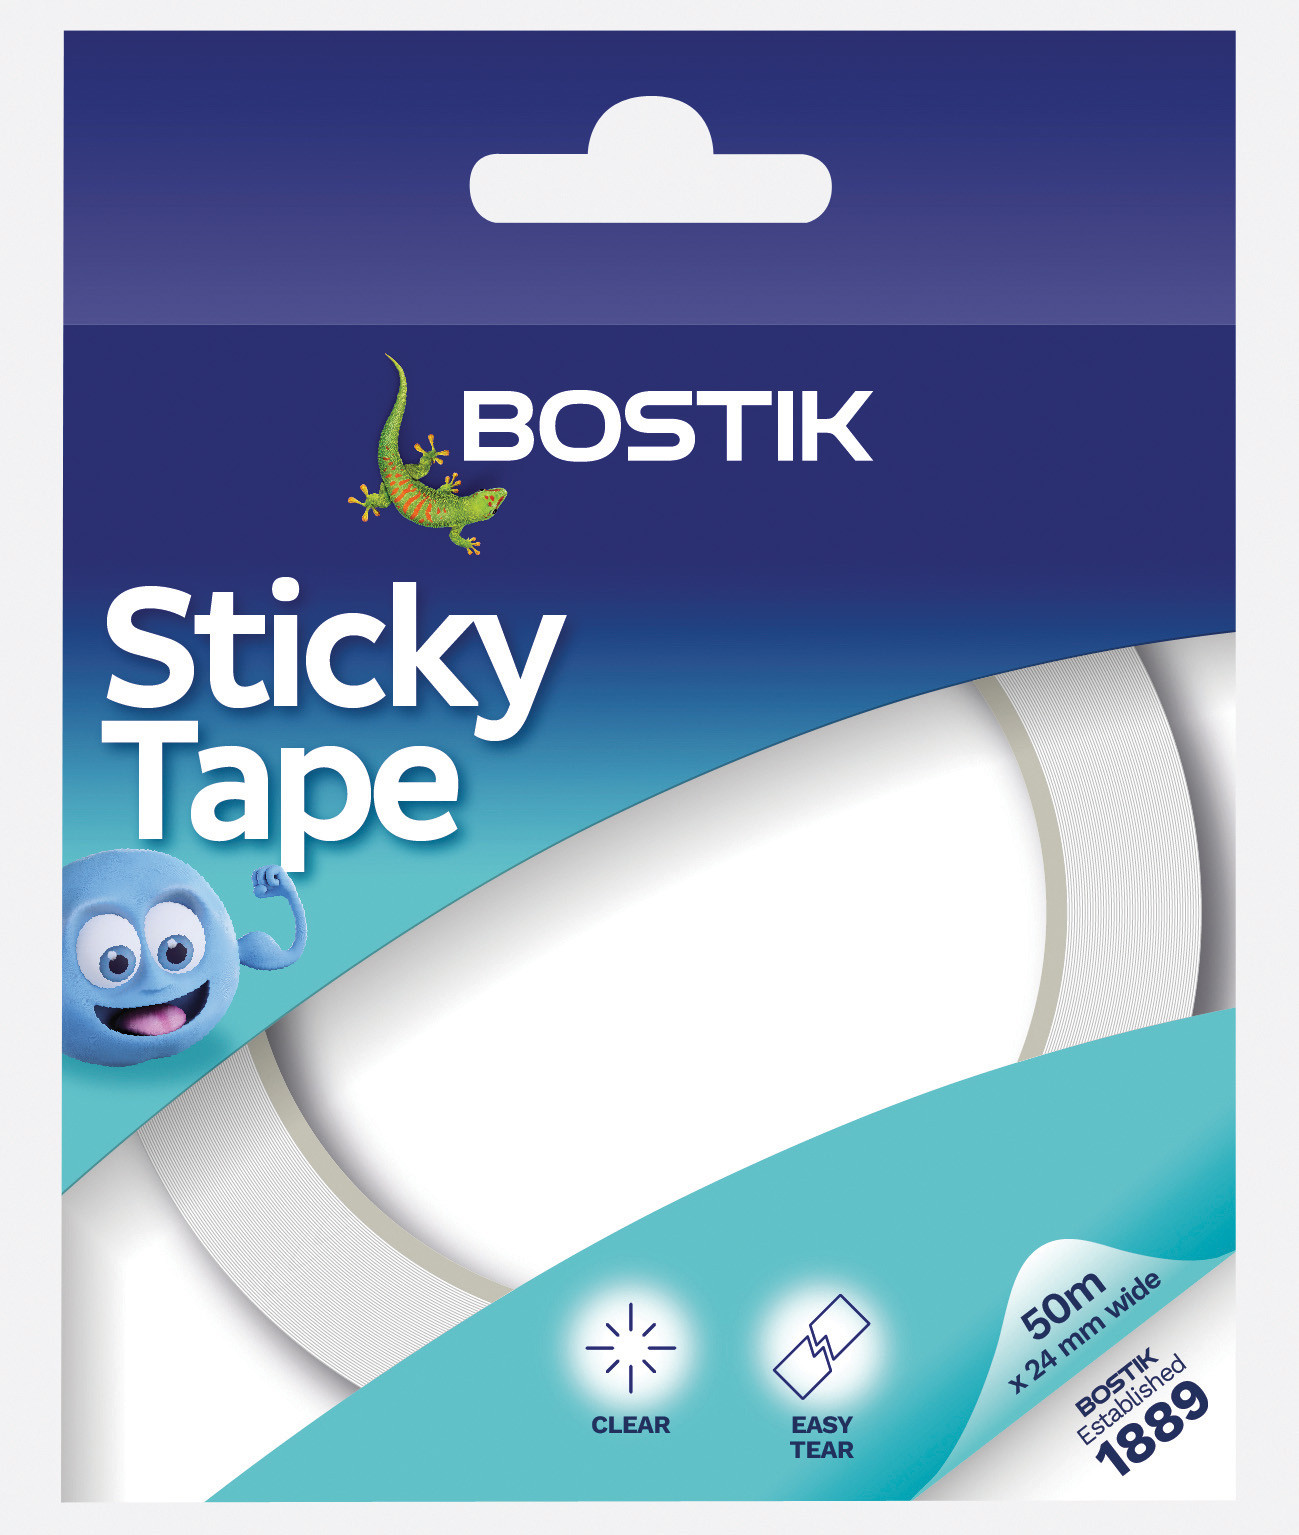 BOSTIK STICKY TAPE - EASY TEAR  CLEAR 24mm x 50mtr